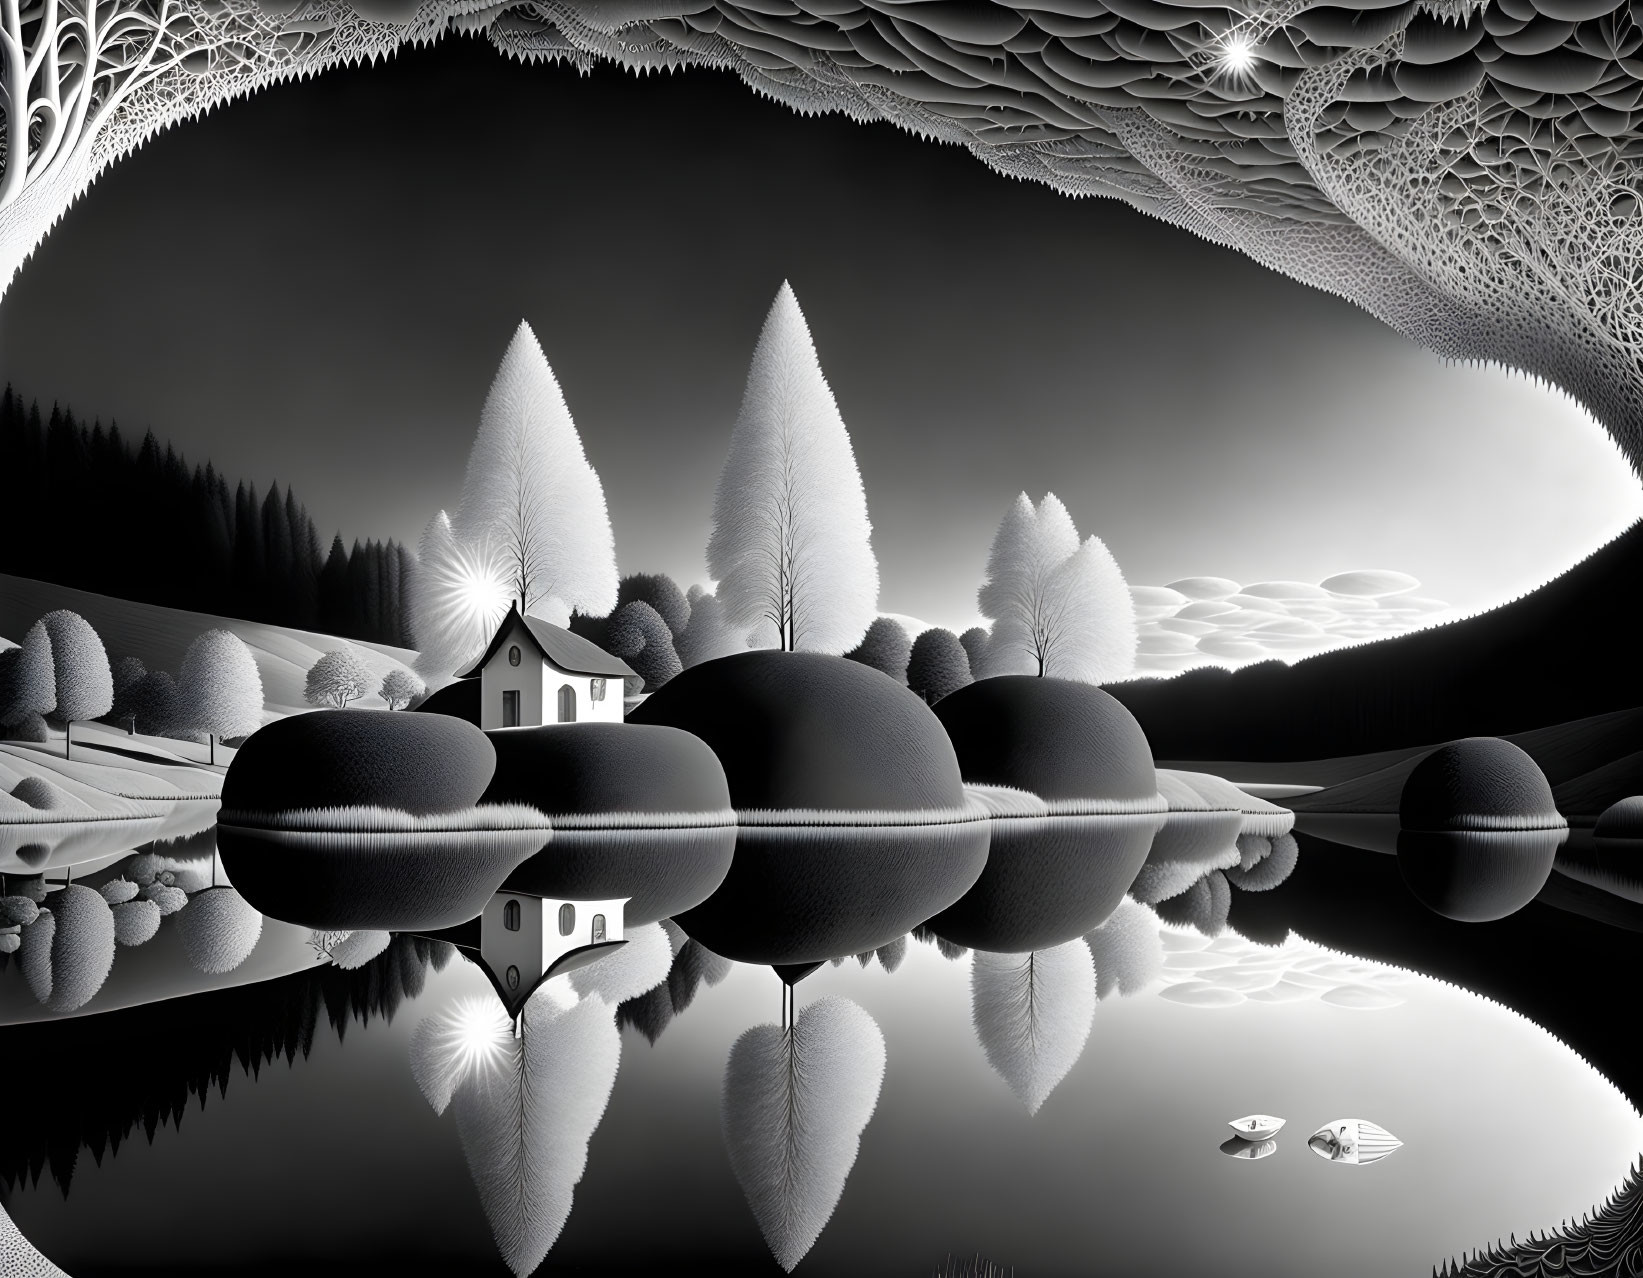 Monochrome fractal landscape with reflective lake, stones, trees, house, sky patterns